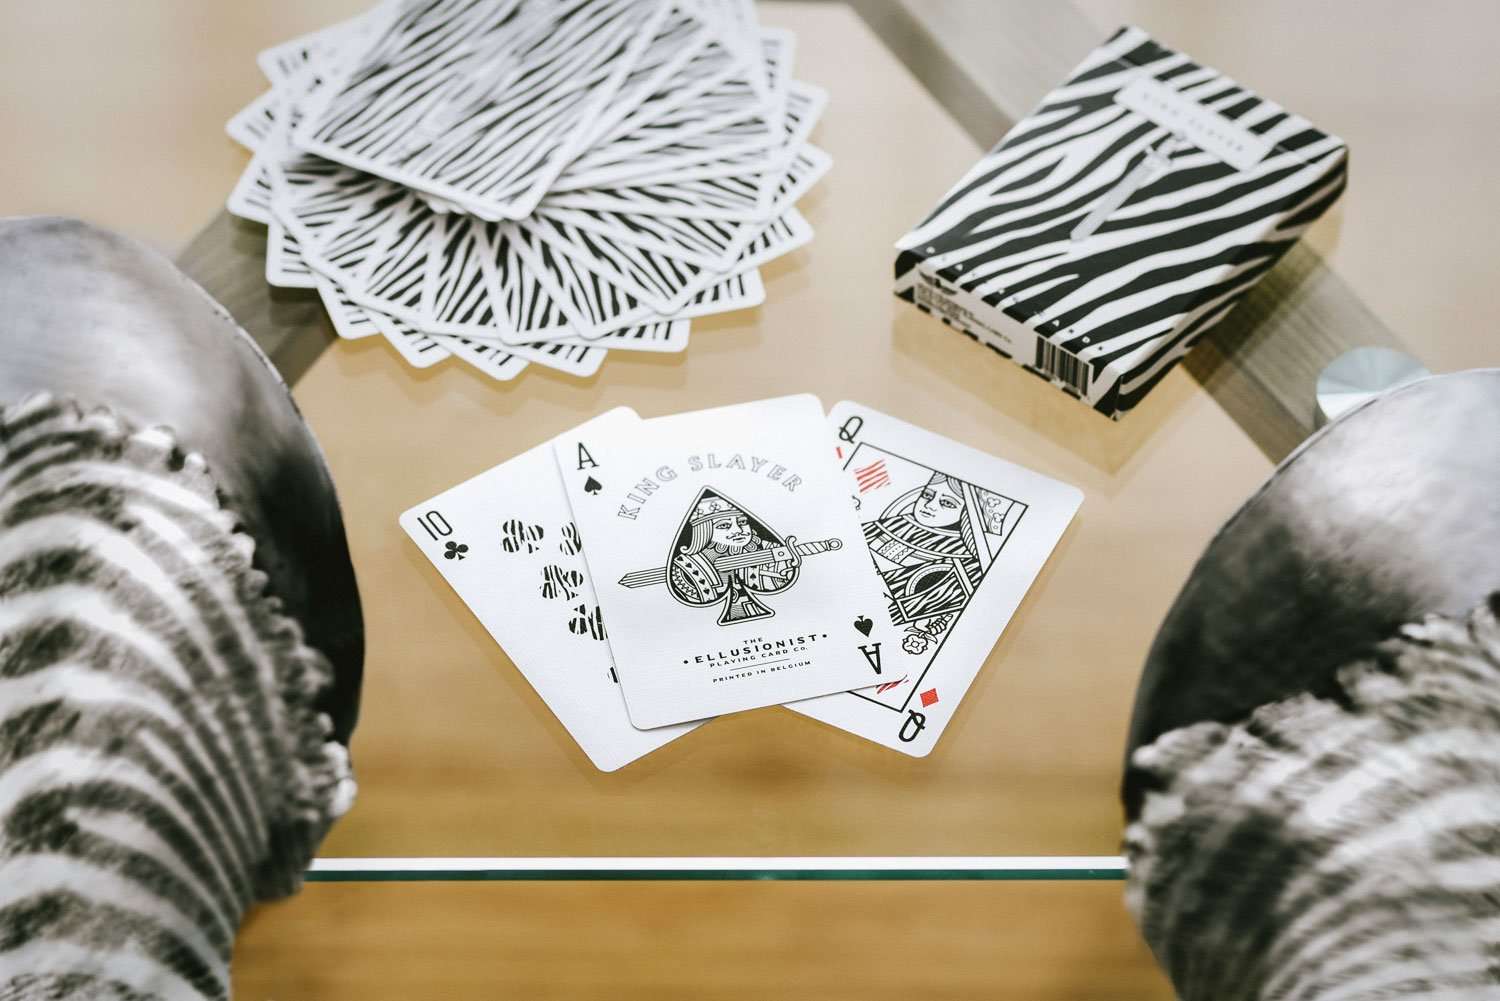 PlayingCardDecks.com-King Slayer Zebra Playing Cards Cartamundi